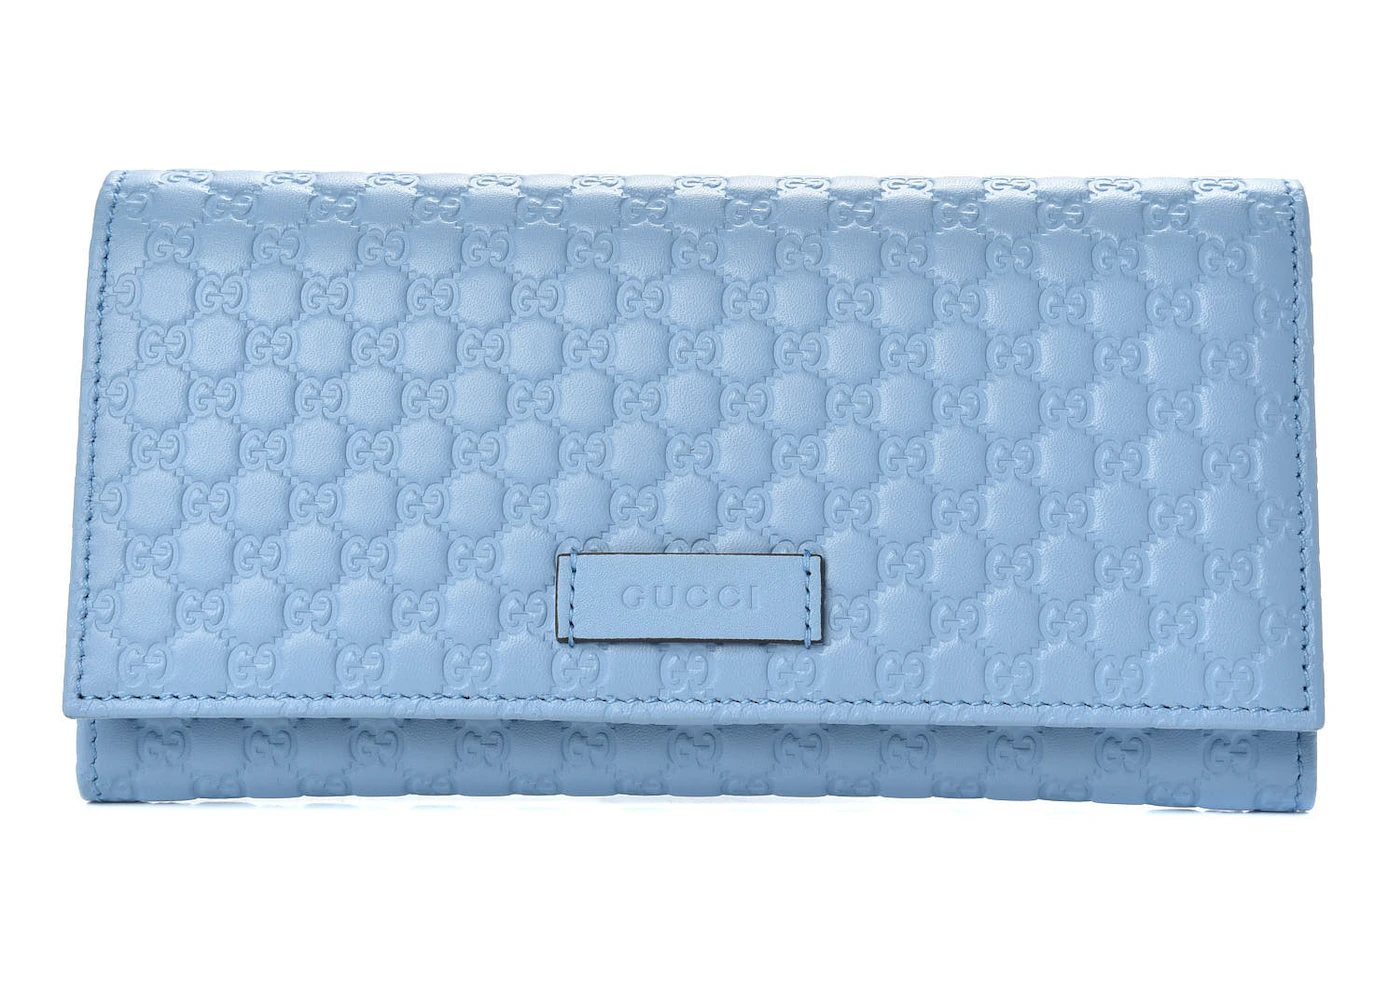 Gucci Microguccissima Continental Flap Wallet Micro Mineral Blue in ...